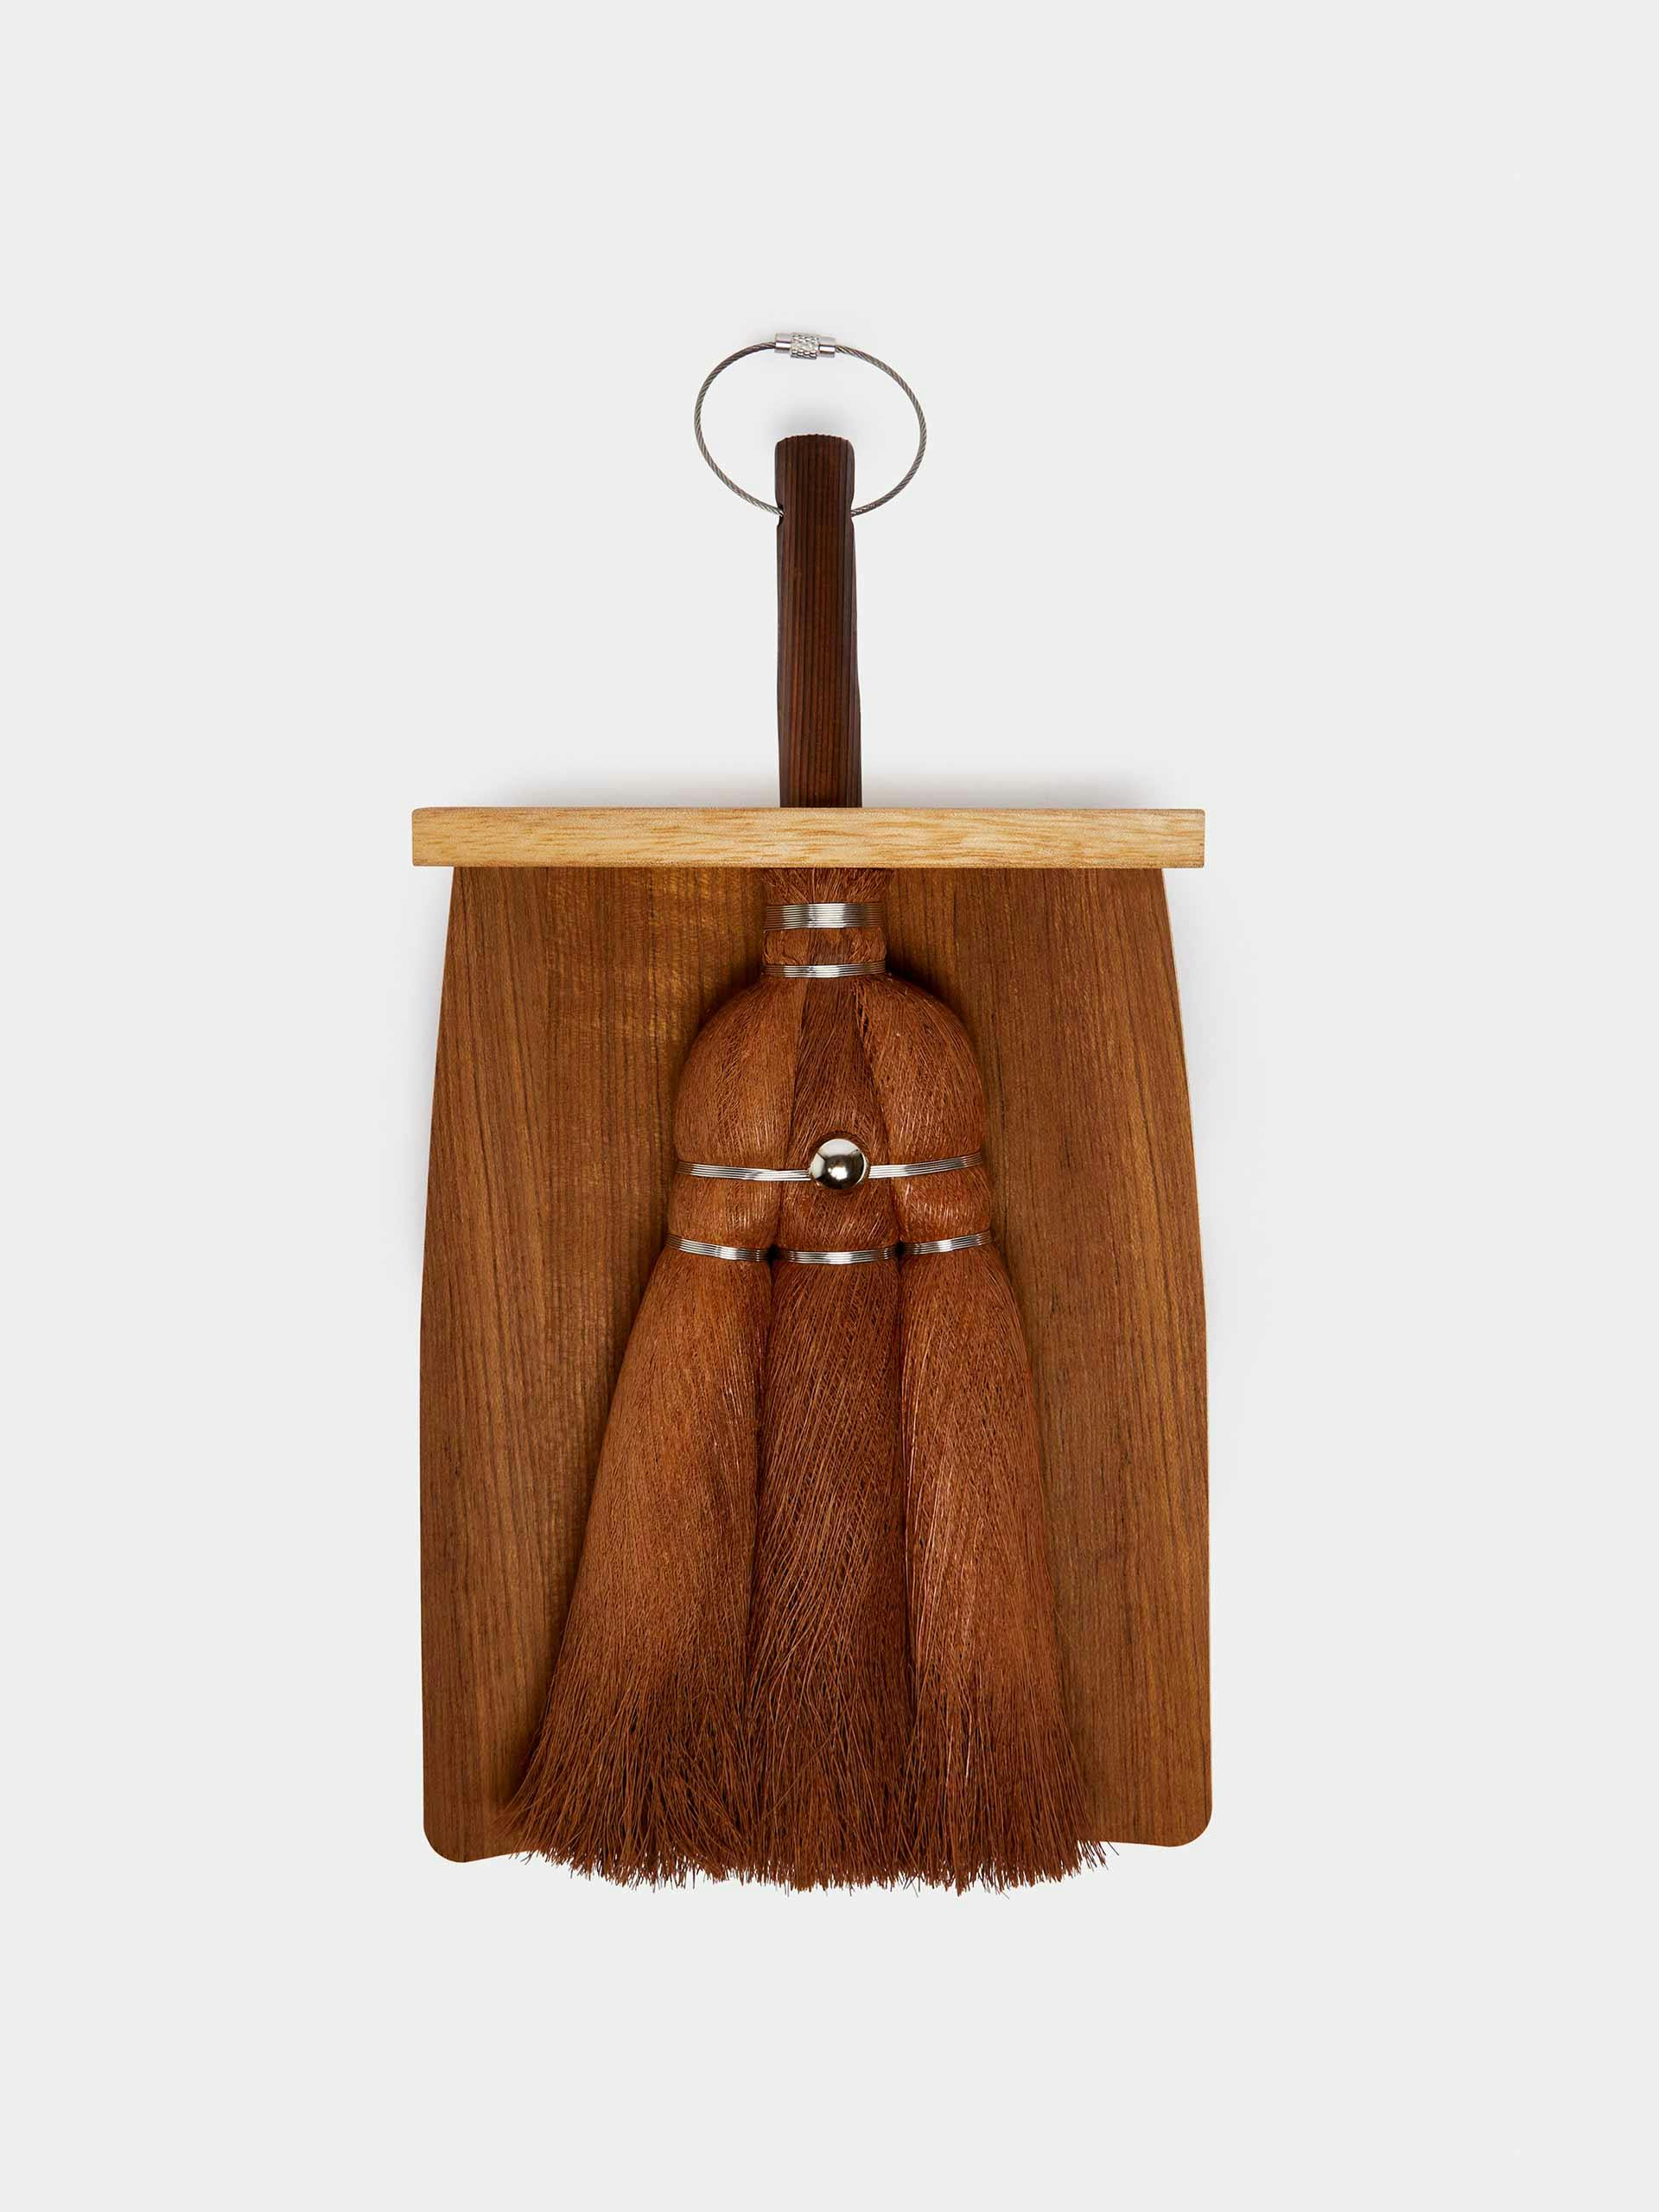 Cypress dustpan and brush